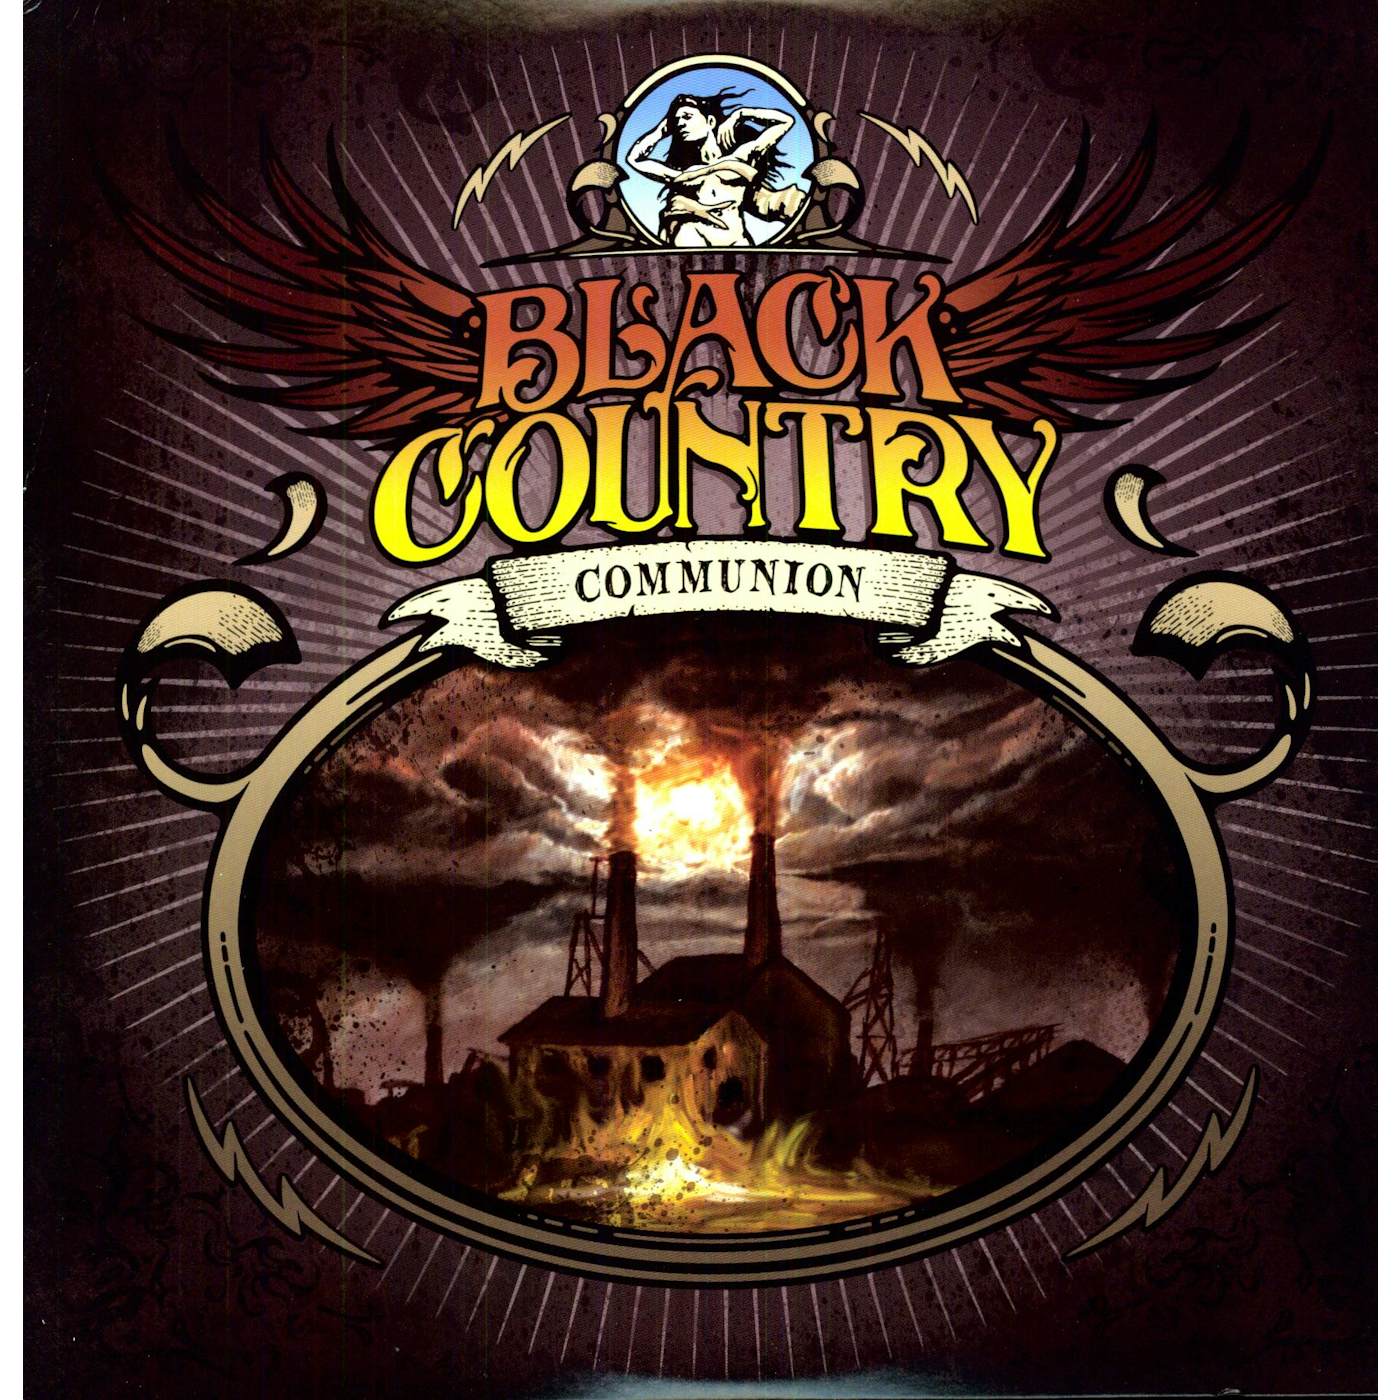 Black Country Communion Vinyl Record